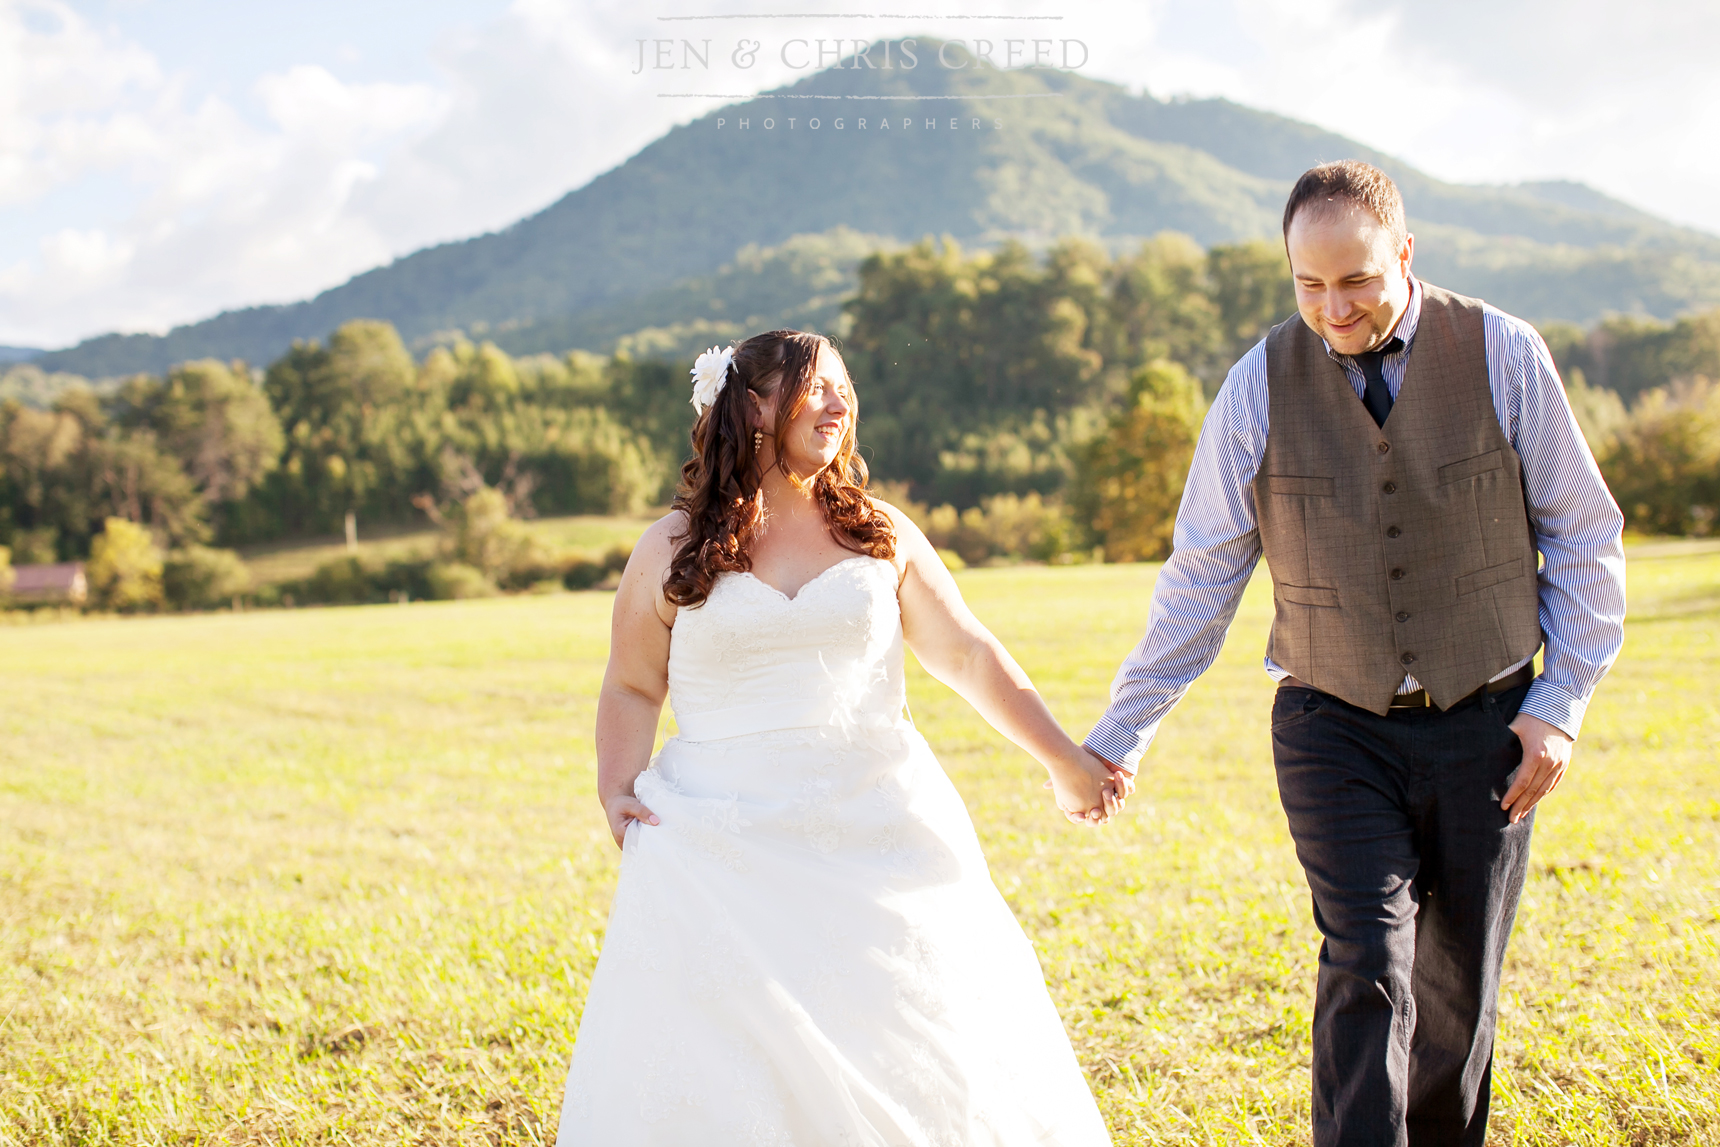 Smoky Mountain bride and groom